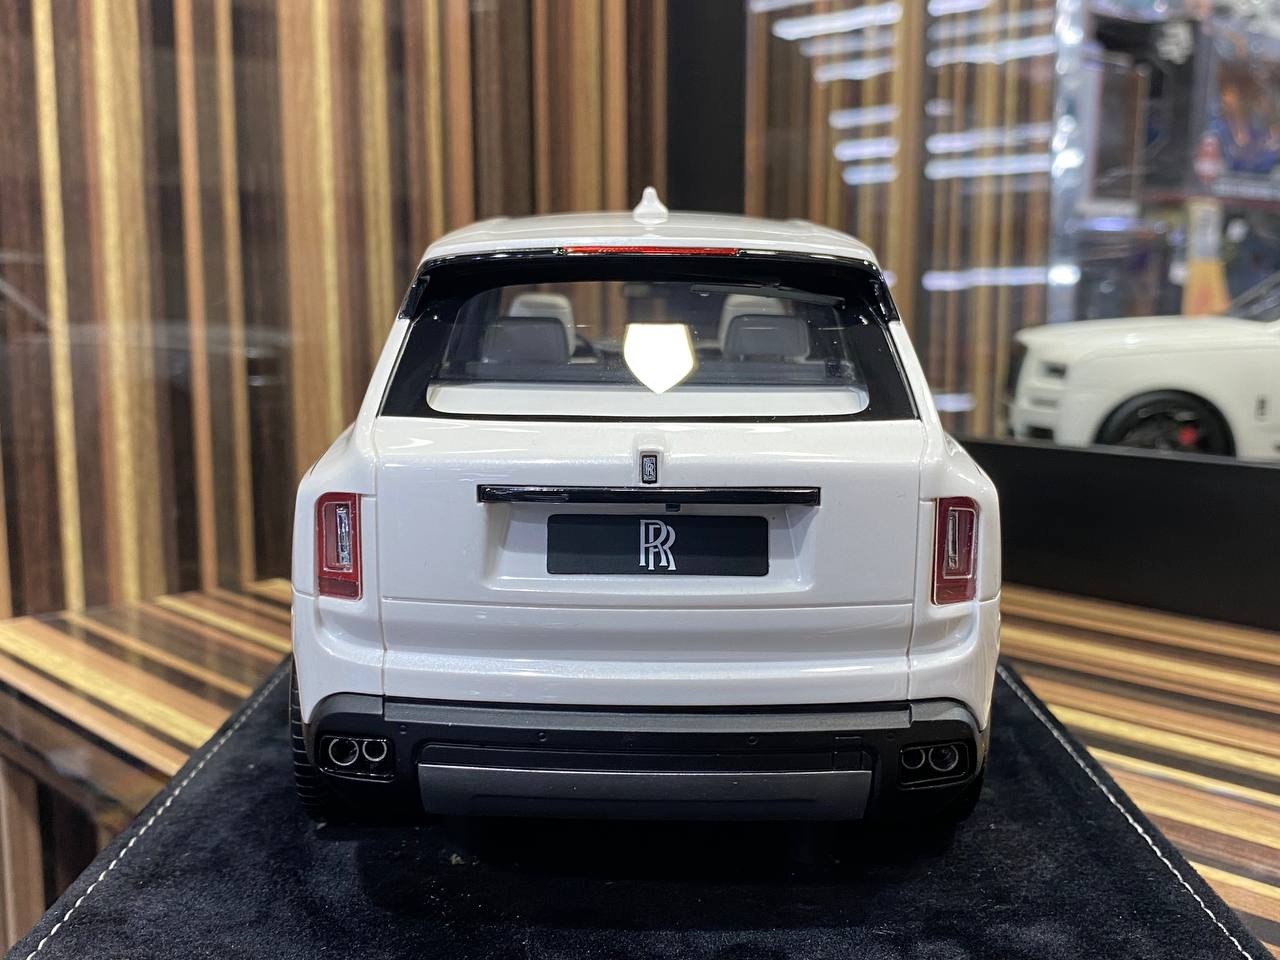 1/18 Henson&Heaven Resin Model - Rolls-Royce Cullinan Limited Edition in Elegant White|Sold in Dturman.com Dubai UAE.